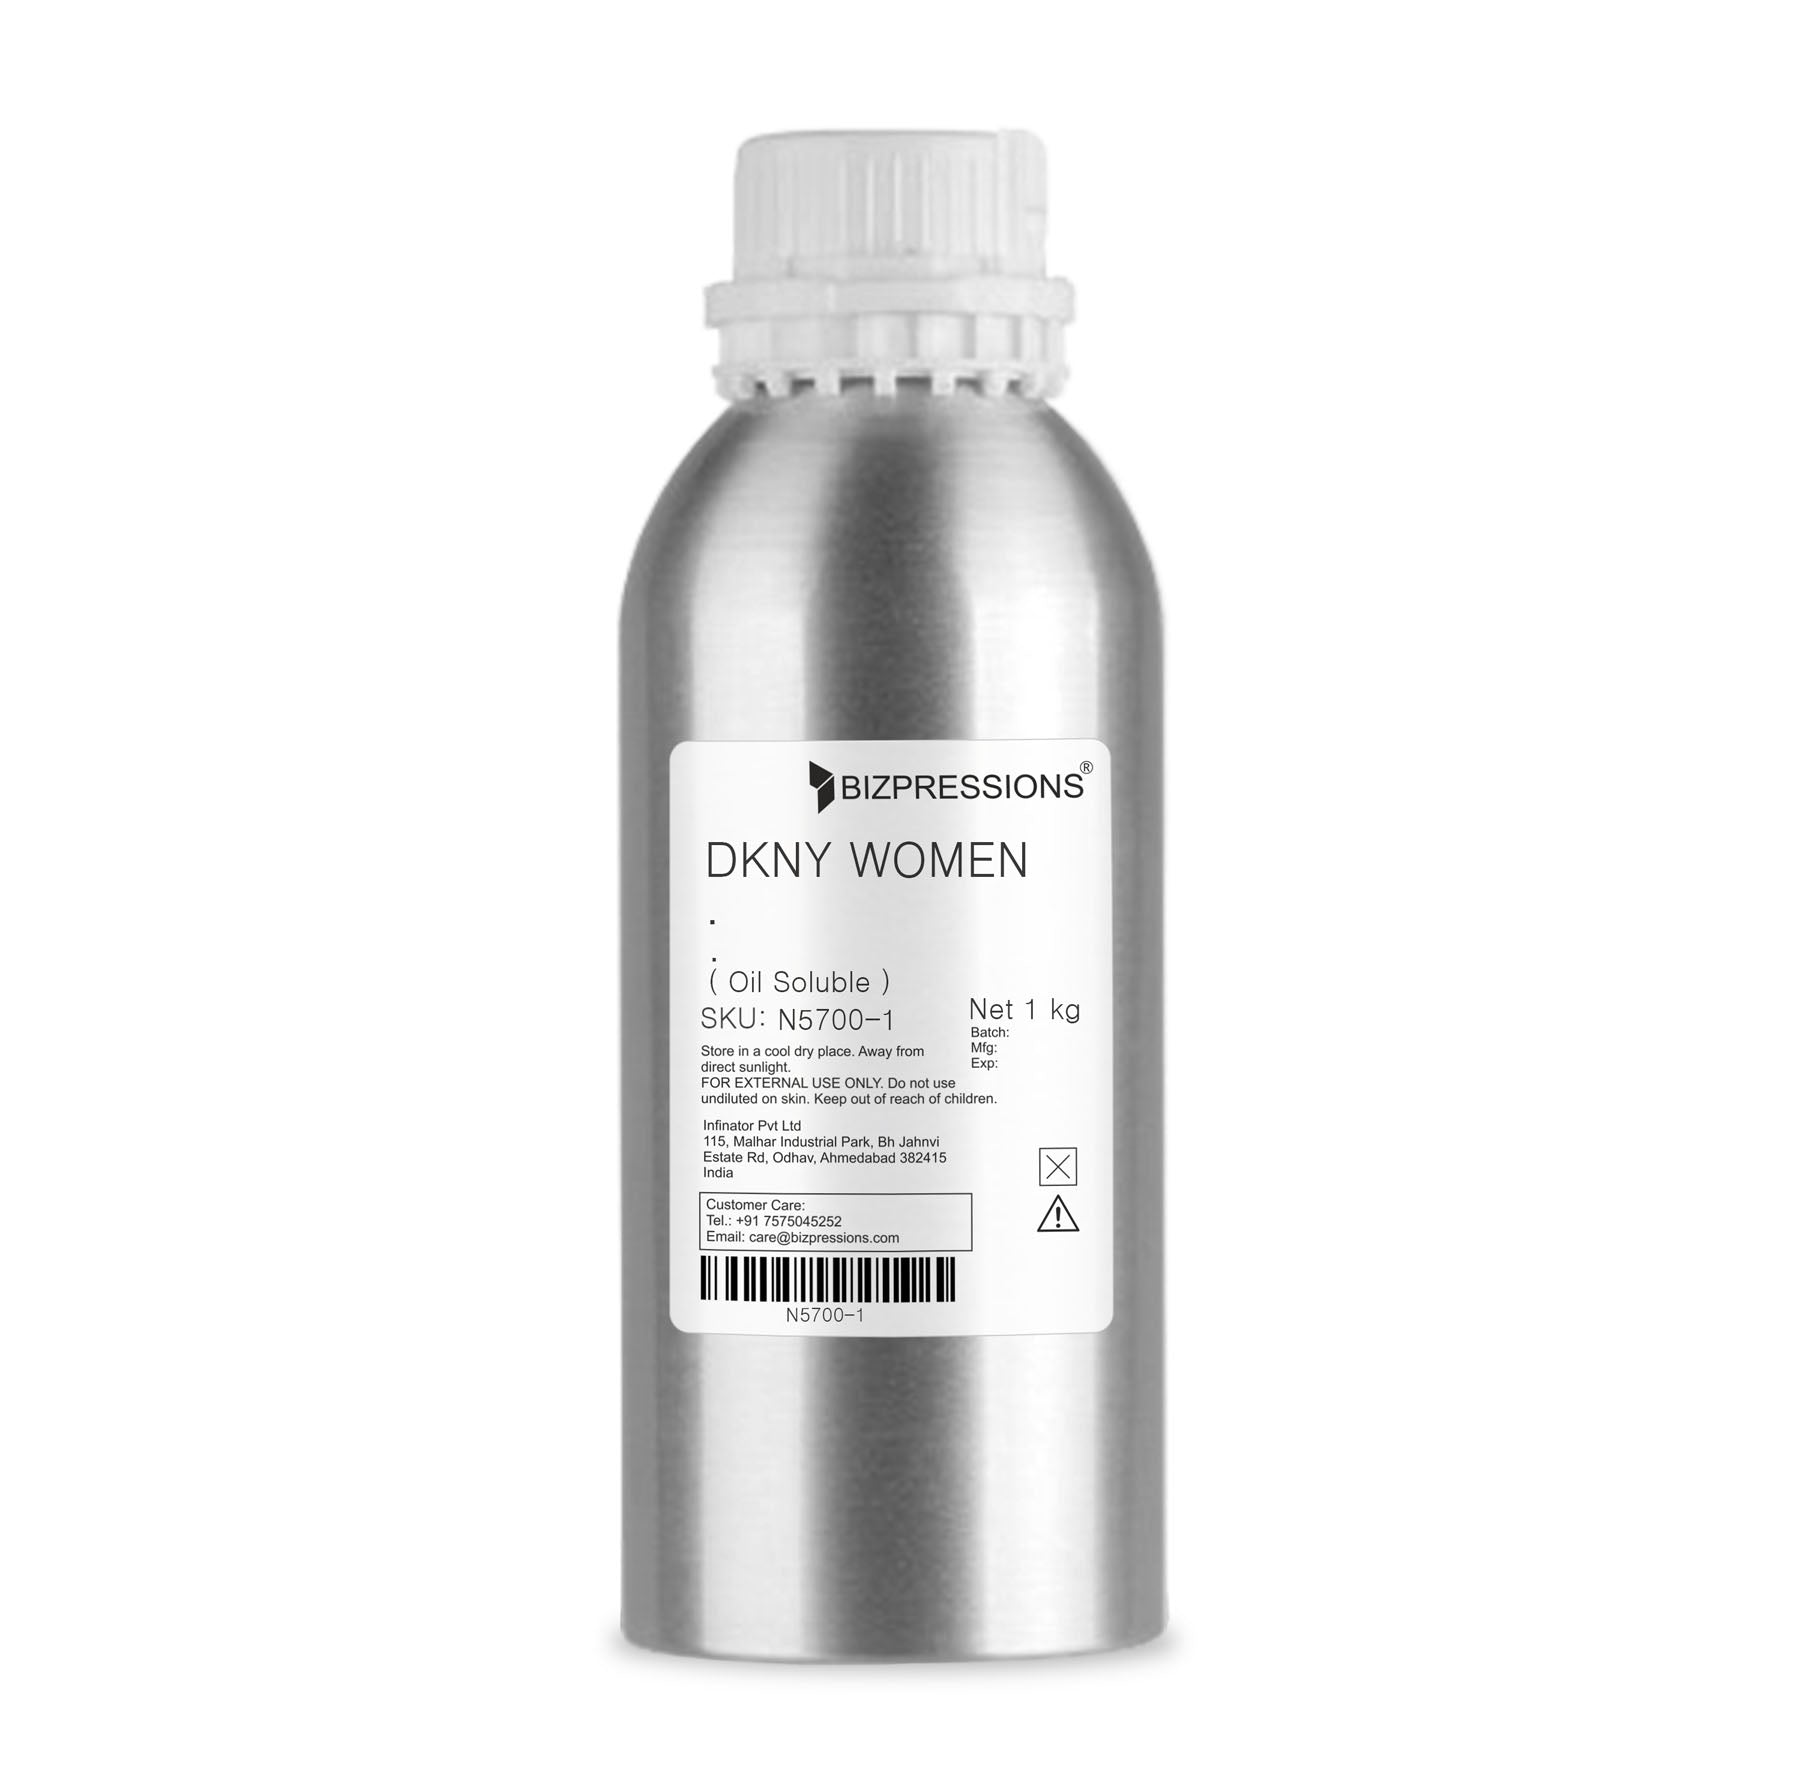 DKNY WOMEN - Fragrance ( Oil Soluble ) - 1 kg